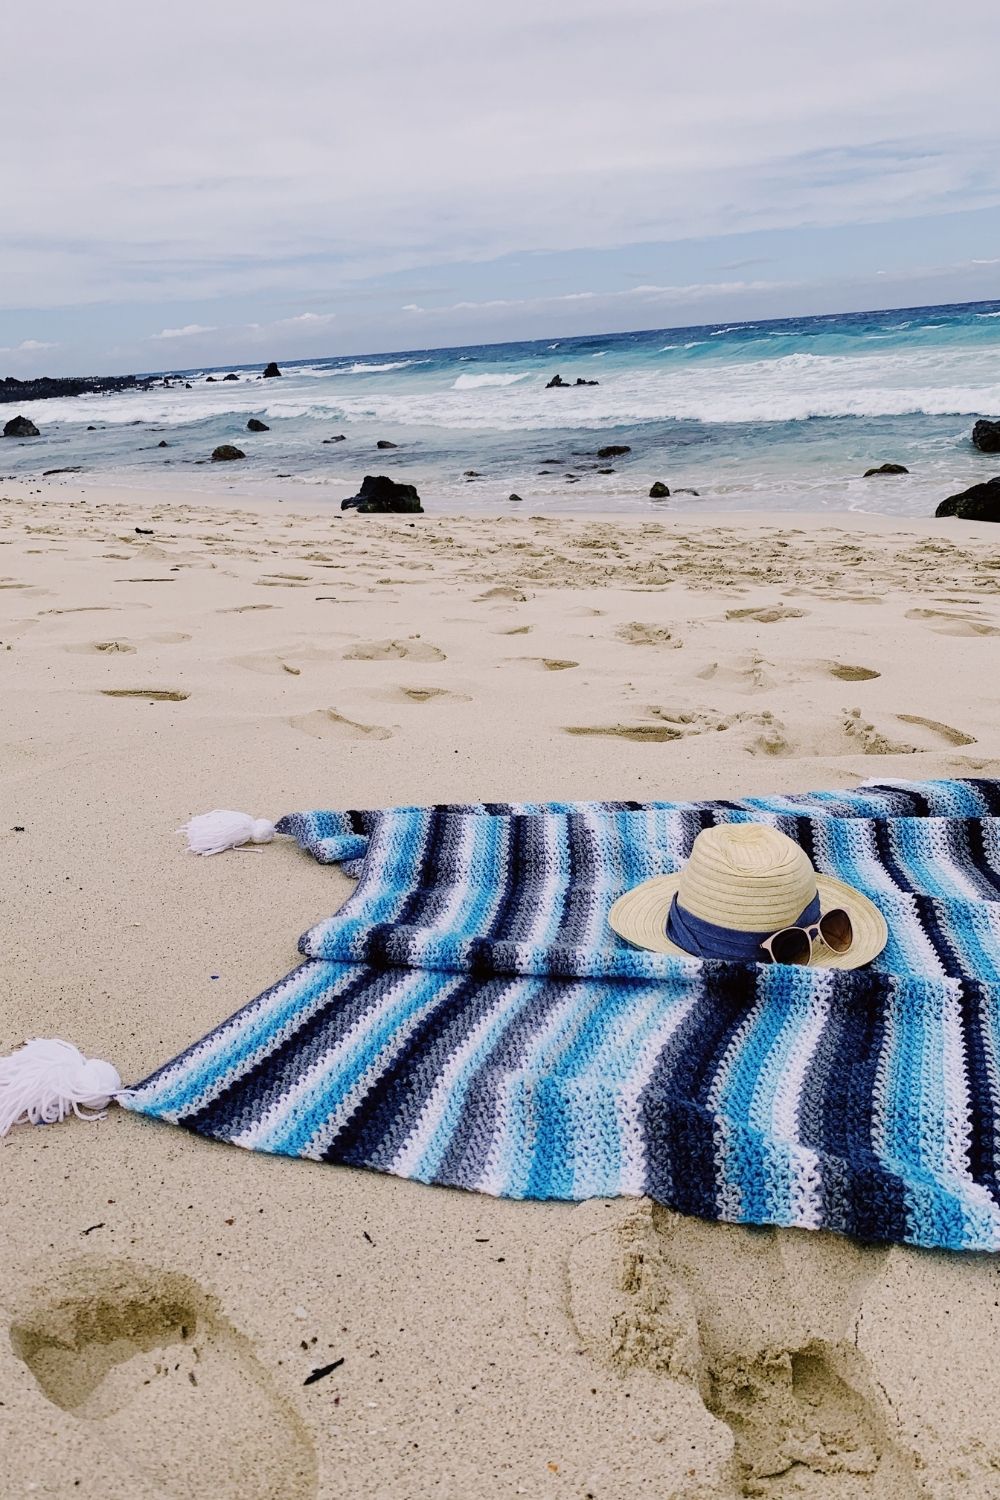 The Kona Coast Throw: A Crochet Beach Blanket with Tassels